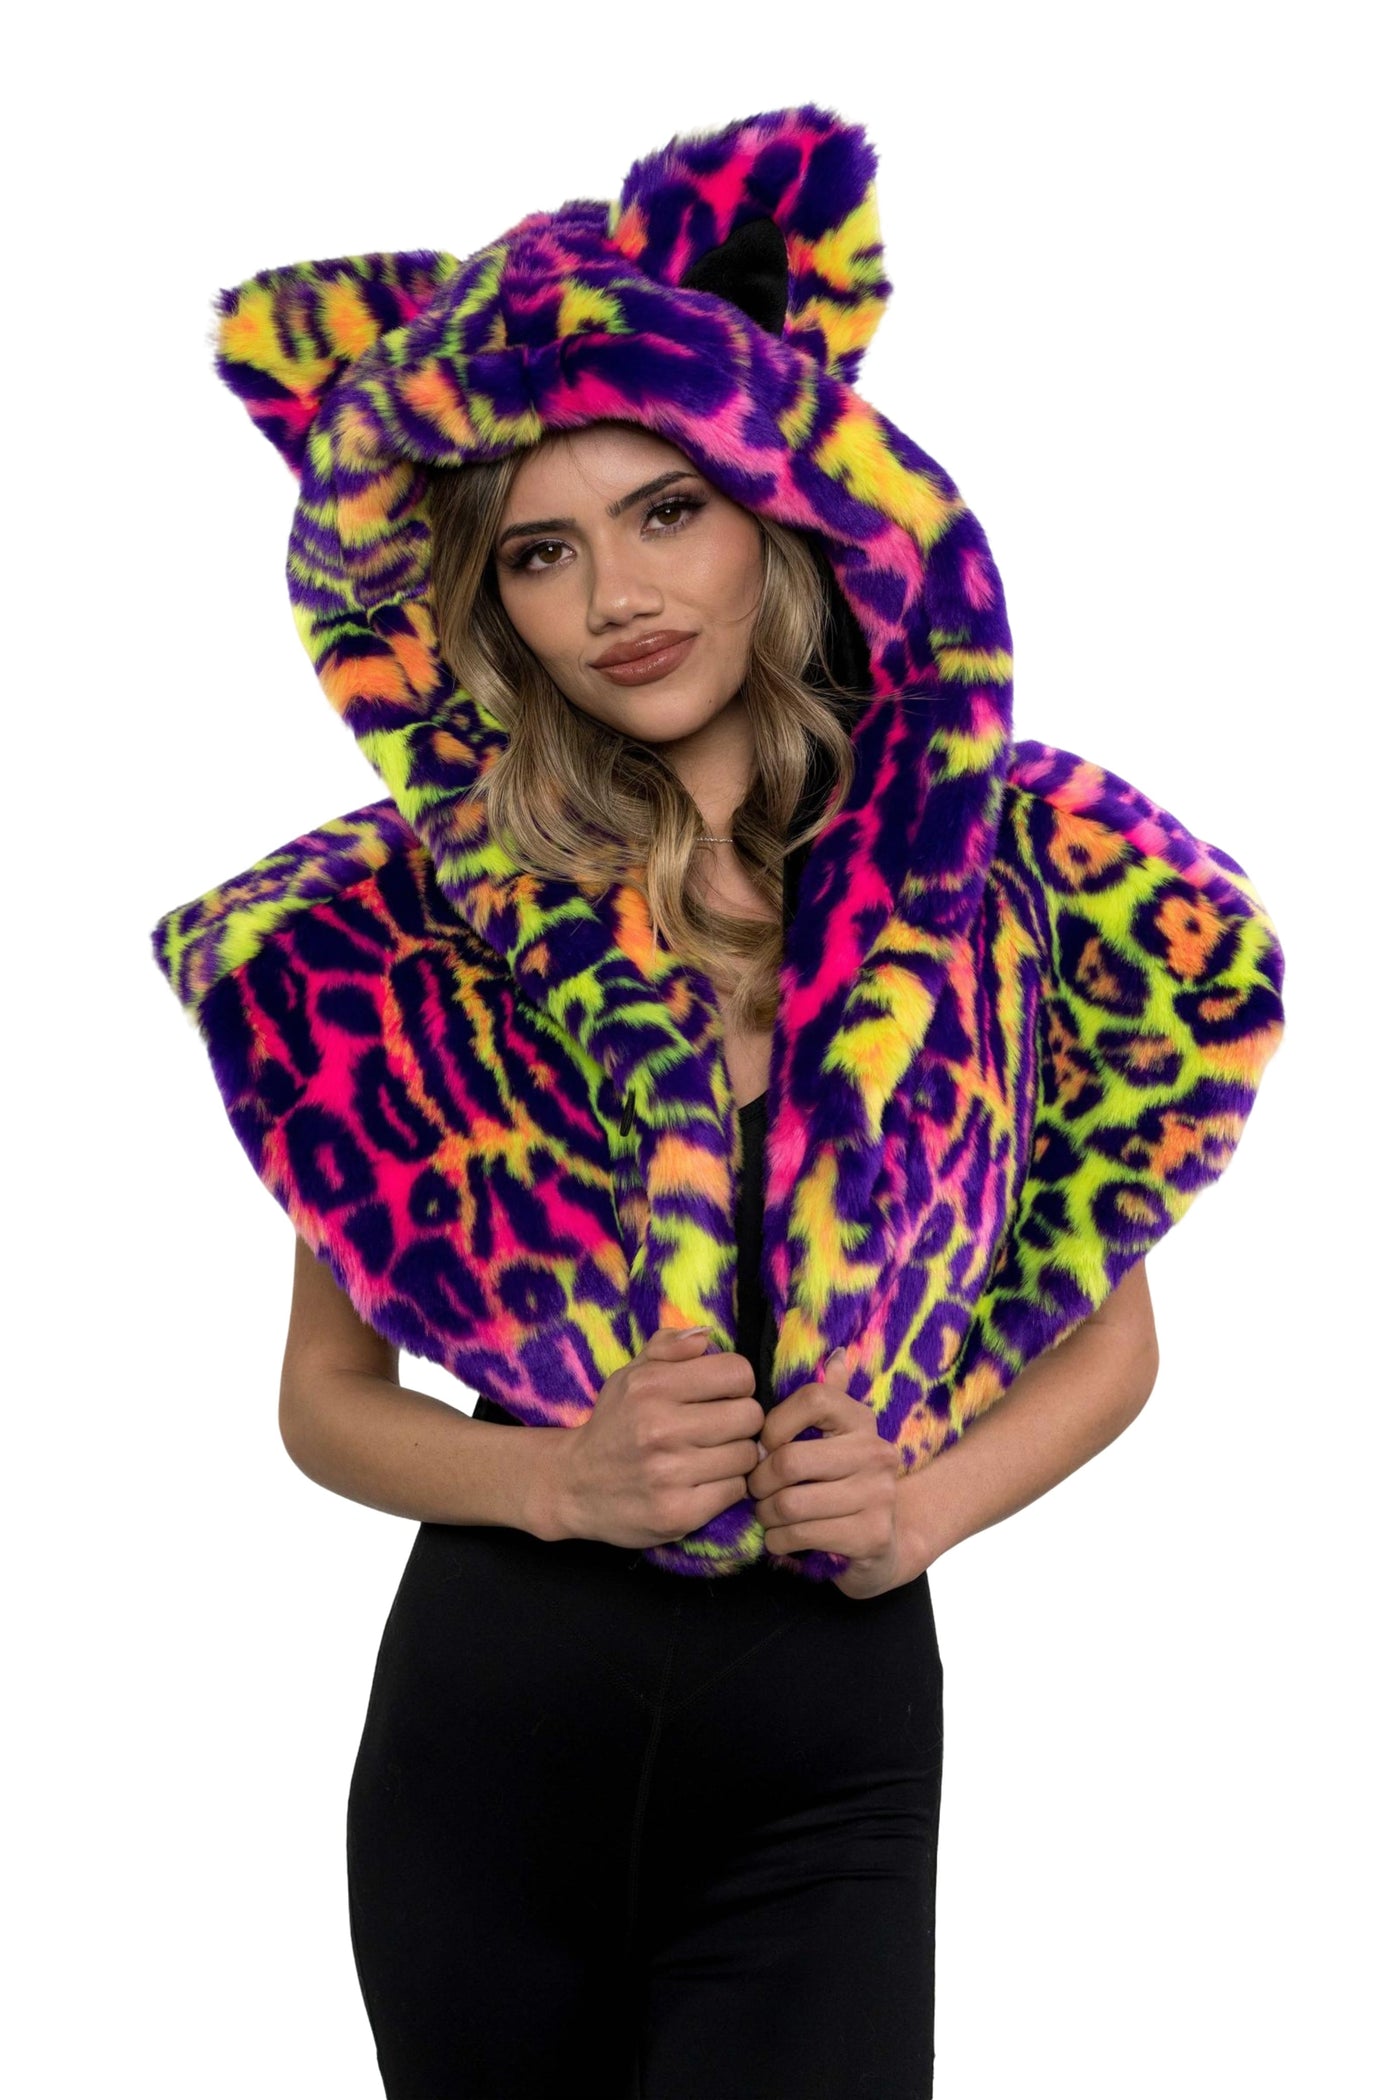 Kitty Hood in "Neon Cheetah" STOCK